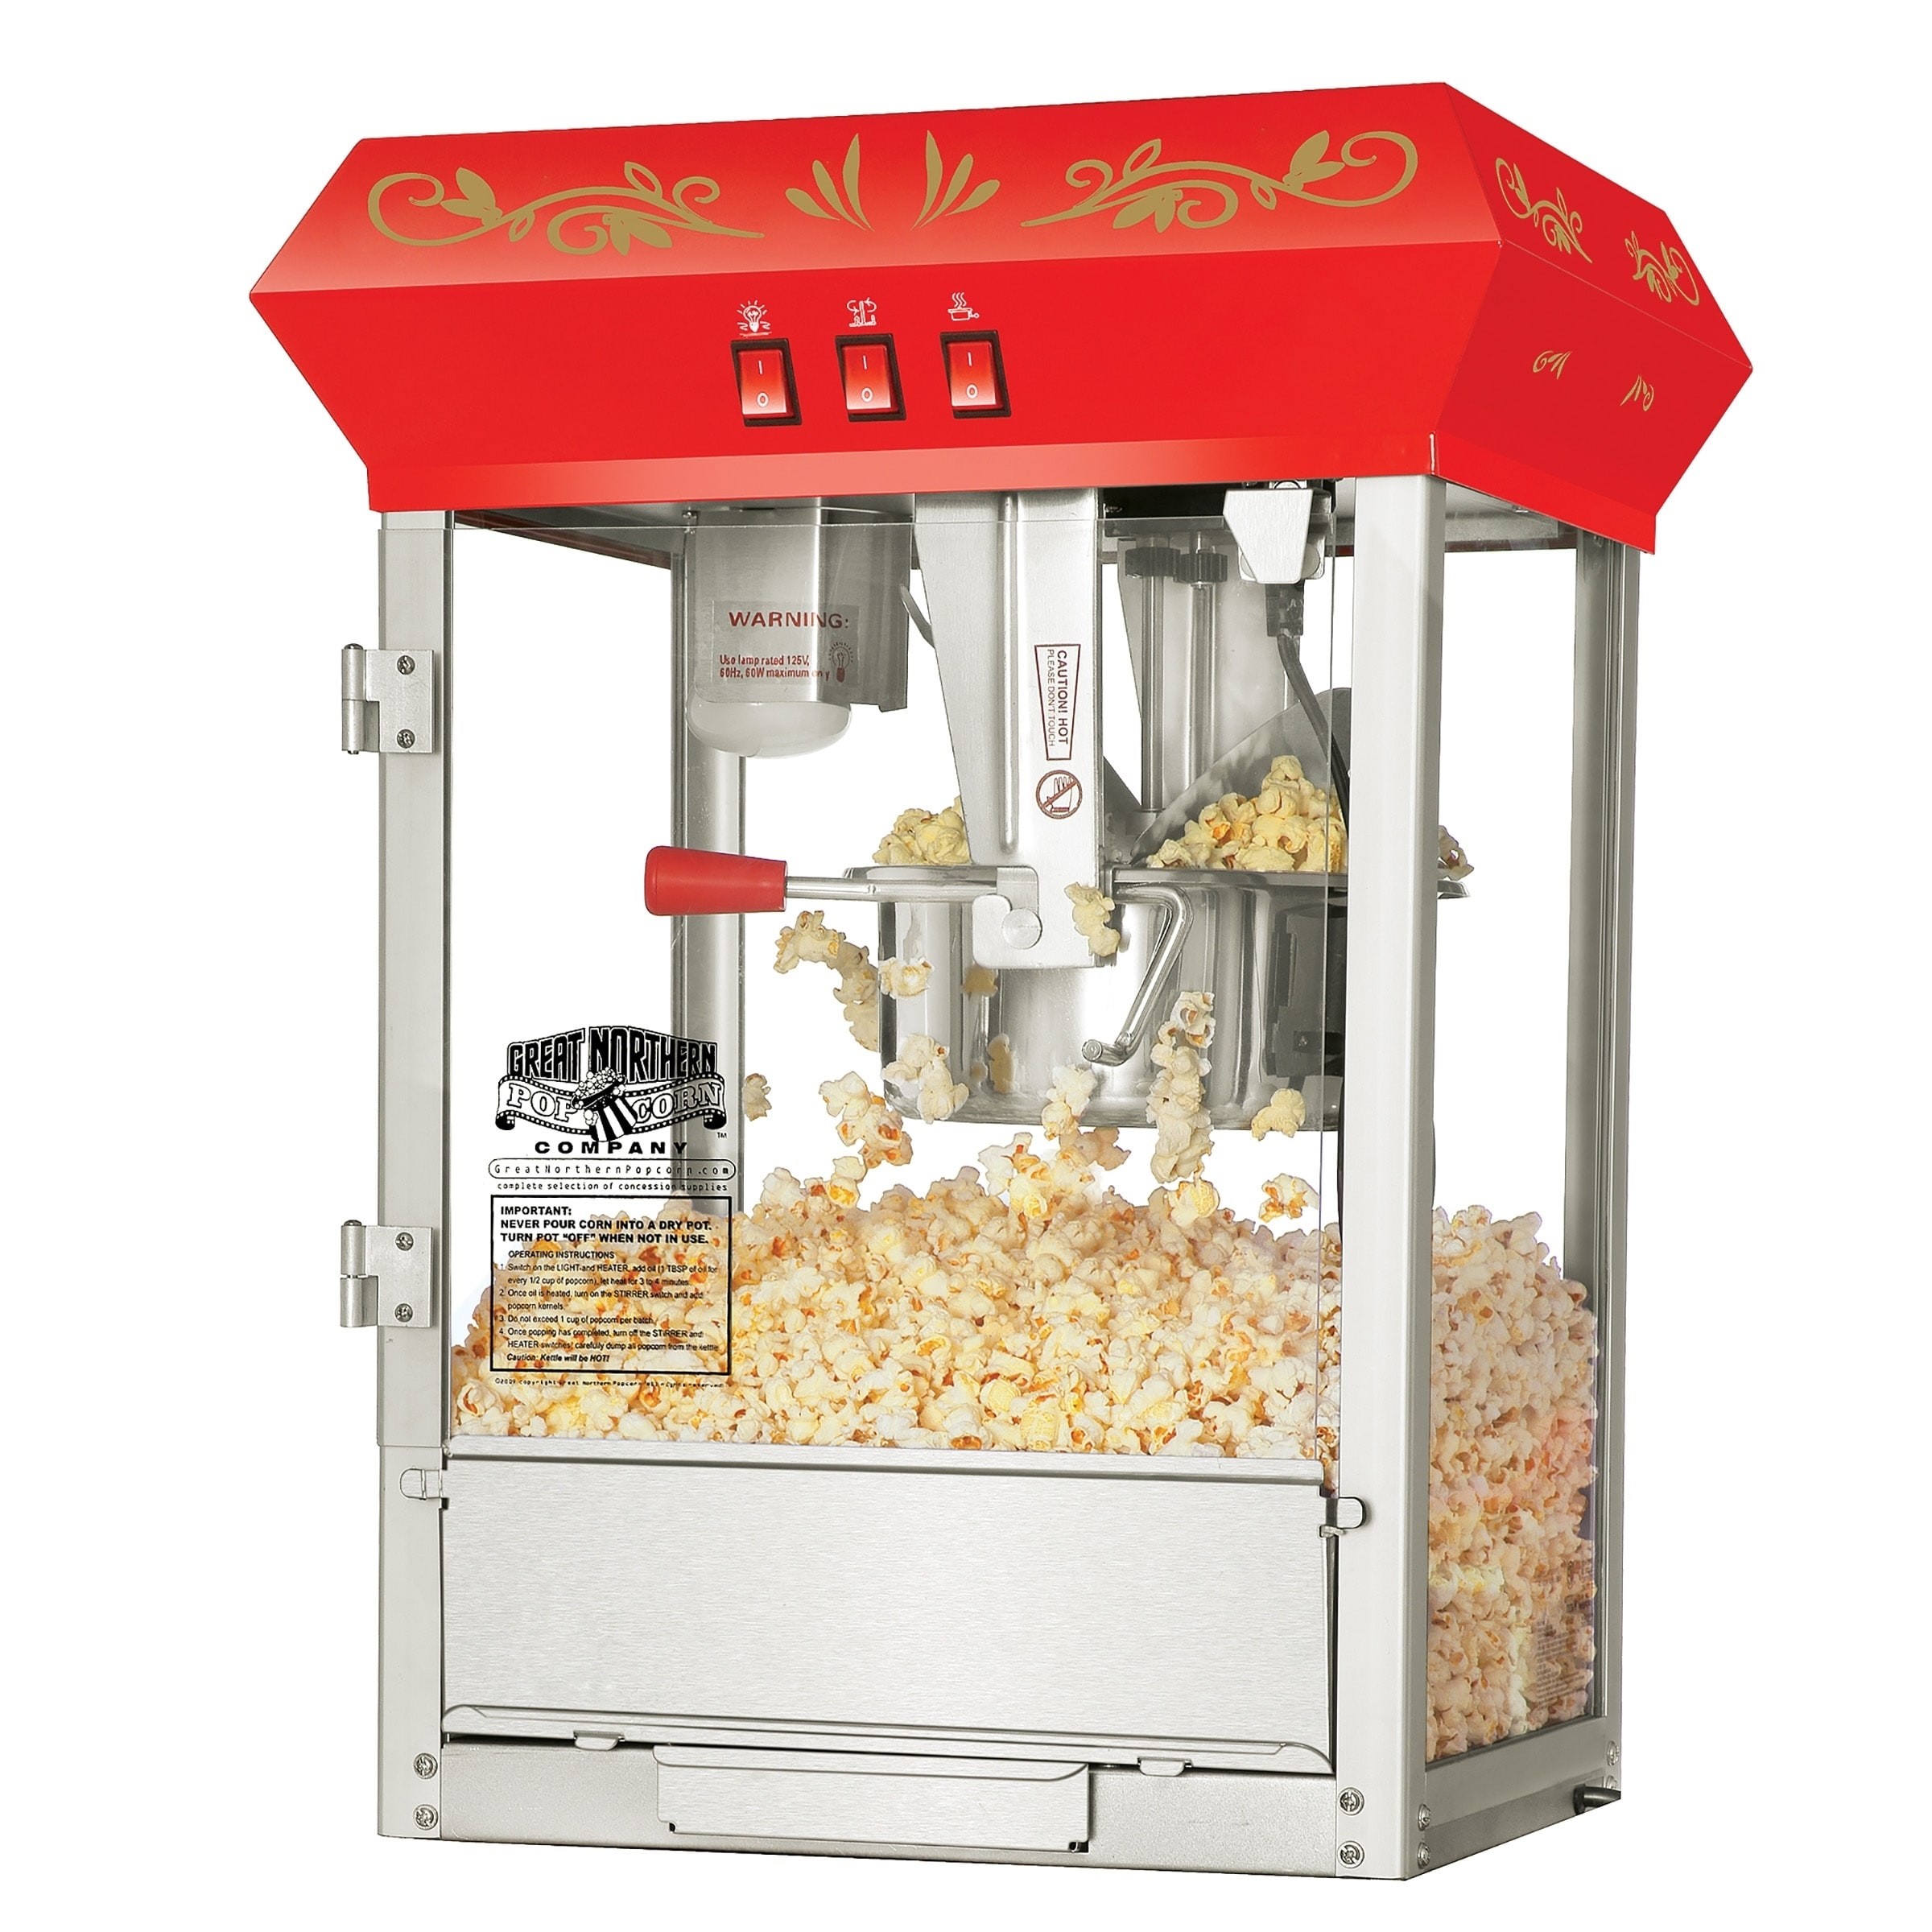 https://ak1.ostkcdn.com/images/products/23462319/Great-Northern-Popcorn-Red-Countertop-Foundation-Popcorn-Machine-8oz-8-oz-fd43177a-a1c7-45c4-ac3f-4dfdeb8ee609.jpg